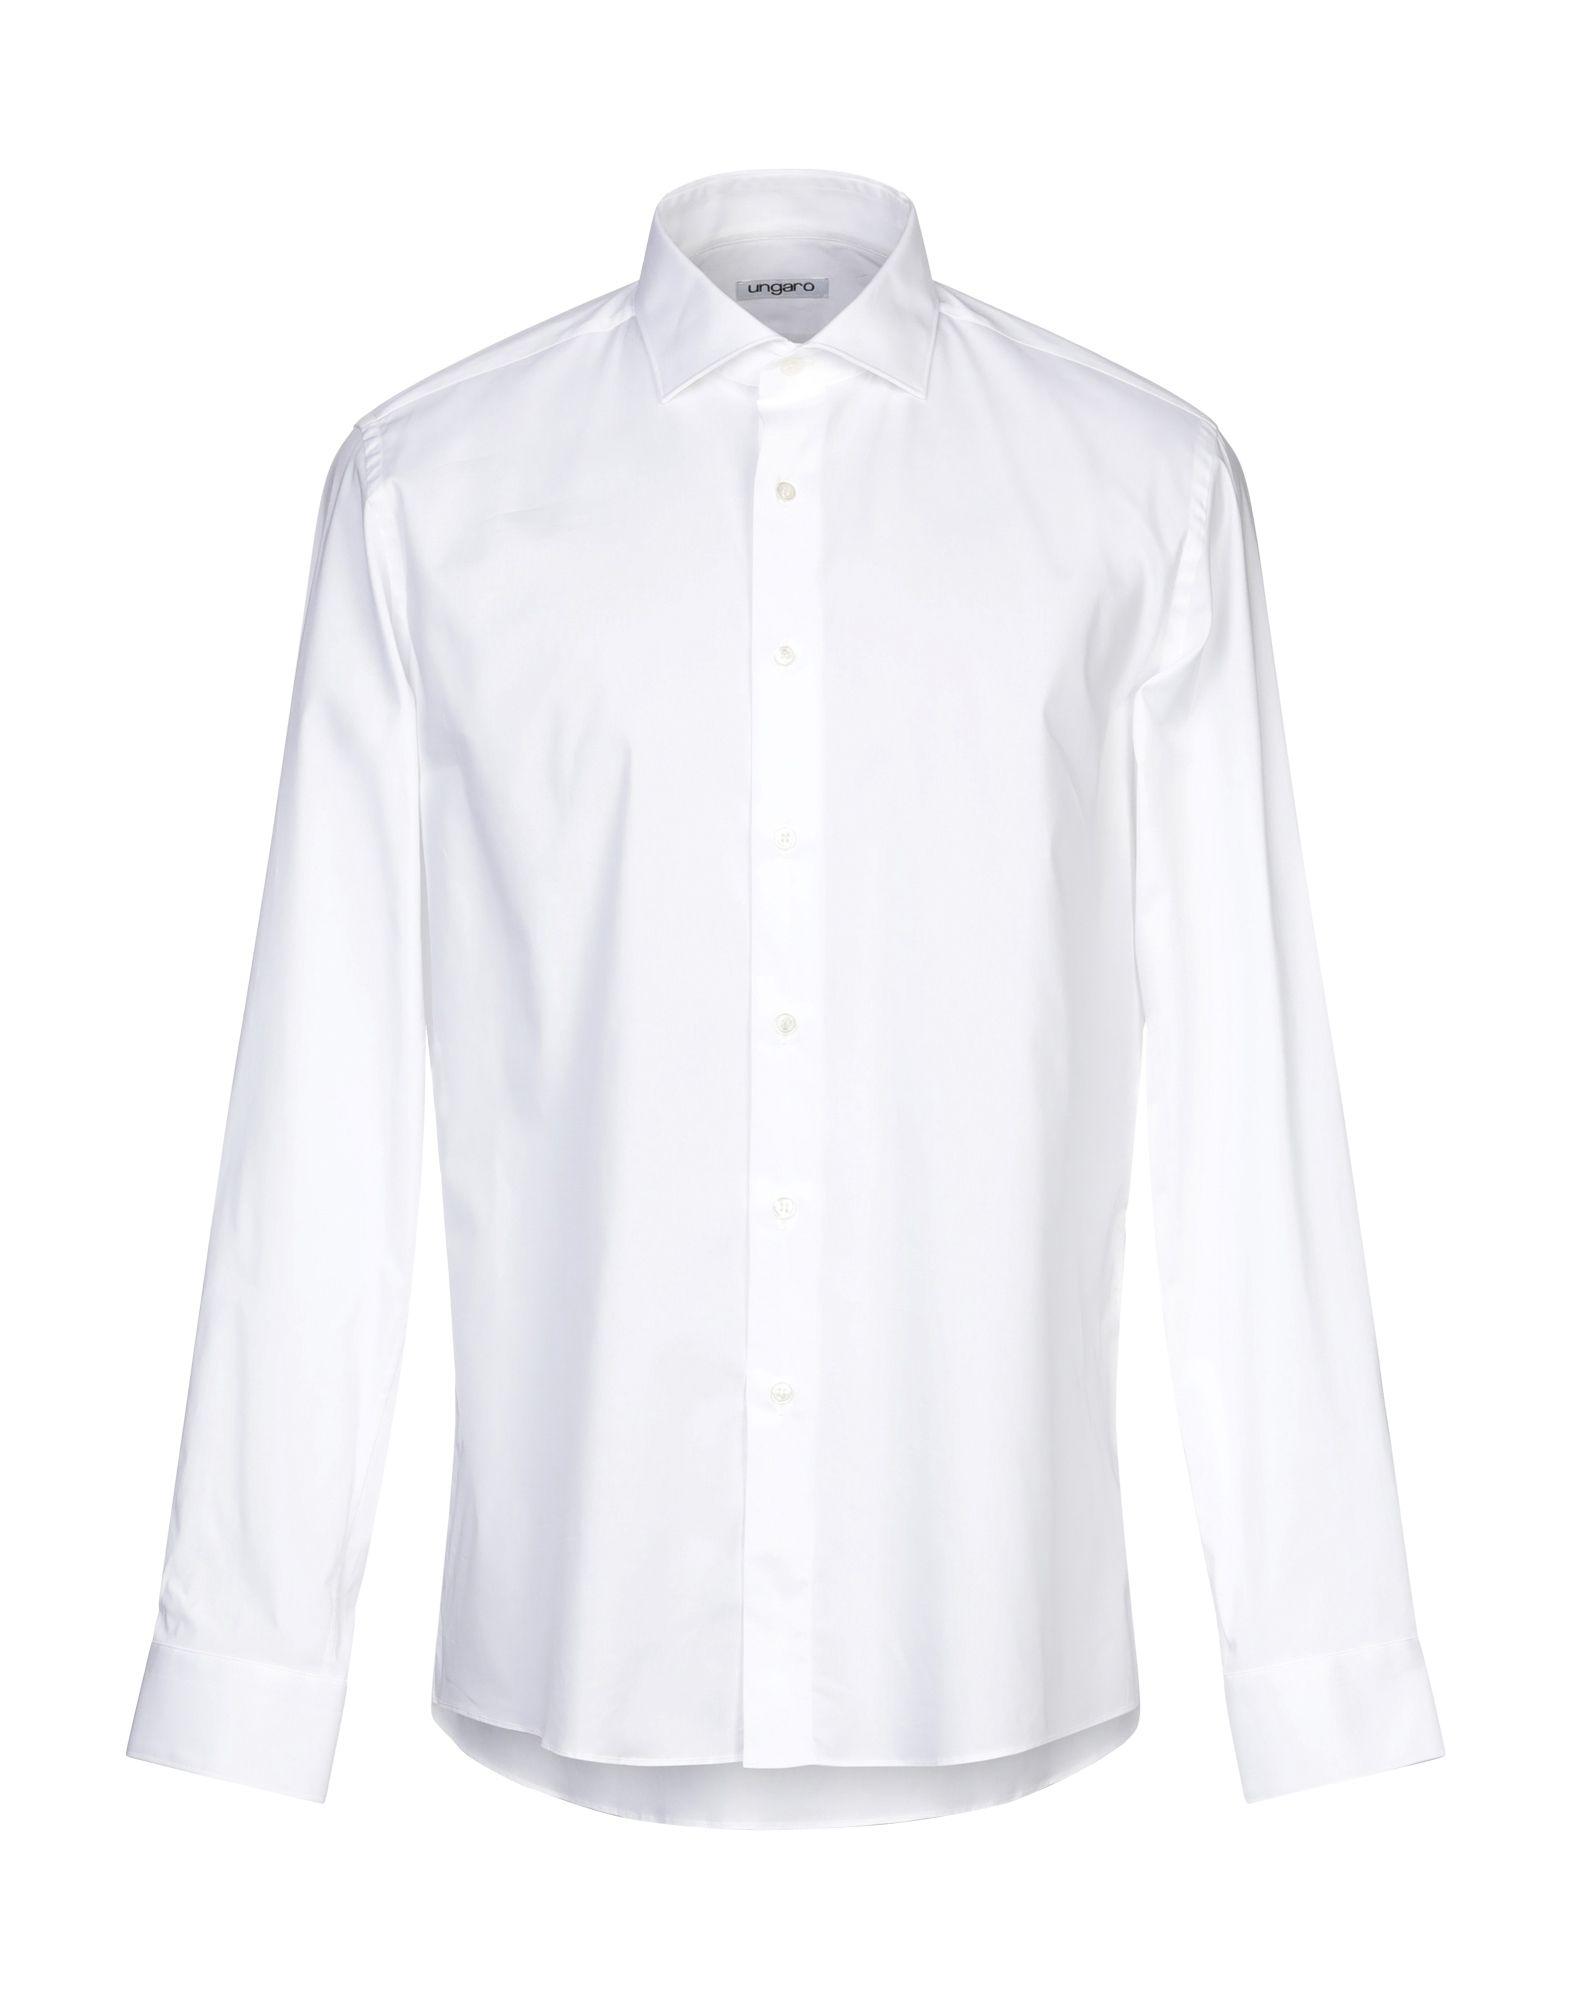 Emanuel Ungaro Cotton Shirt in White for Men - Lyst